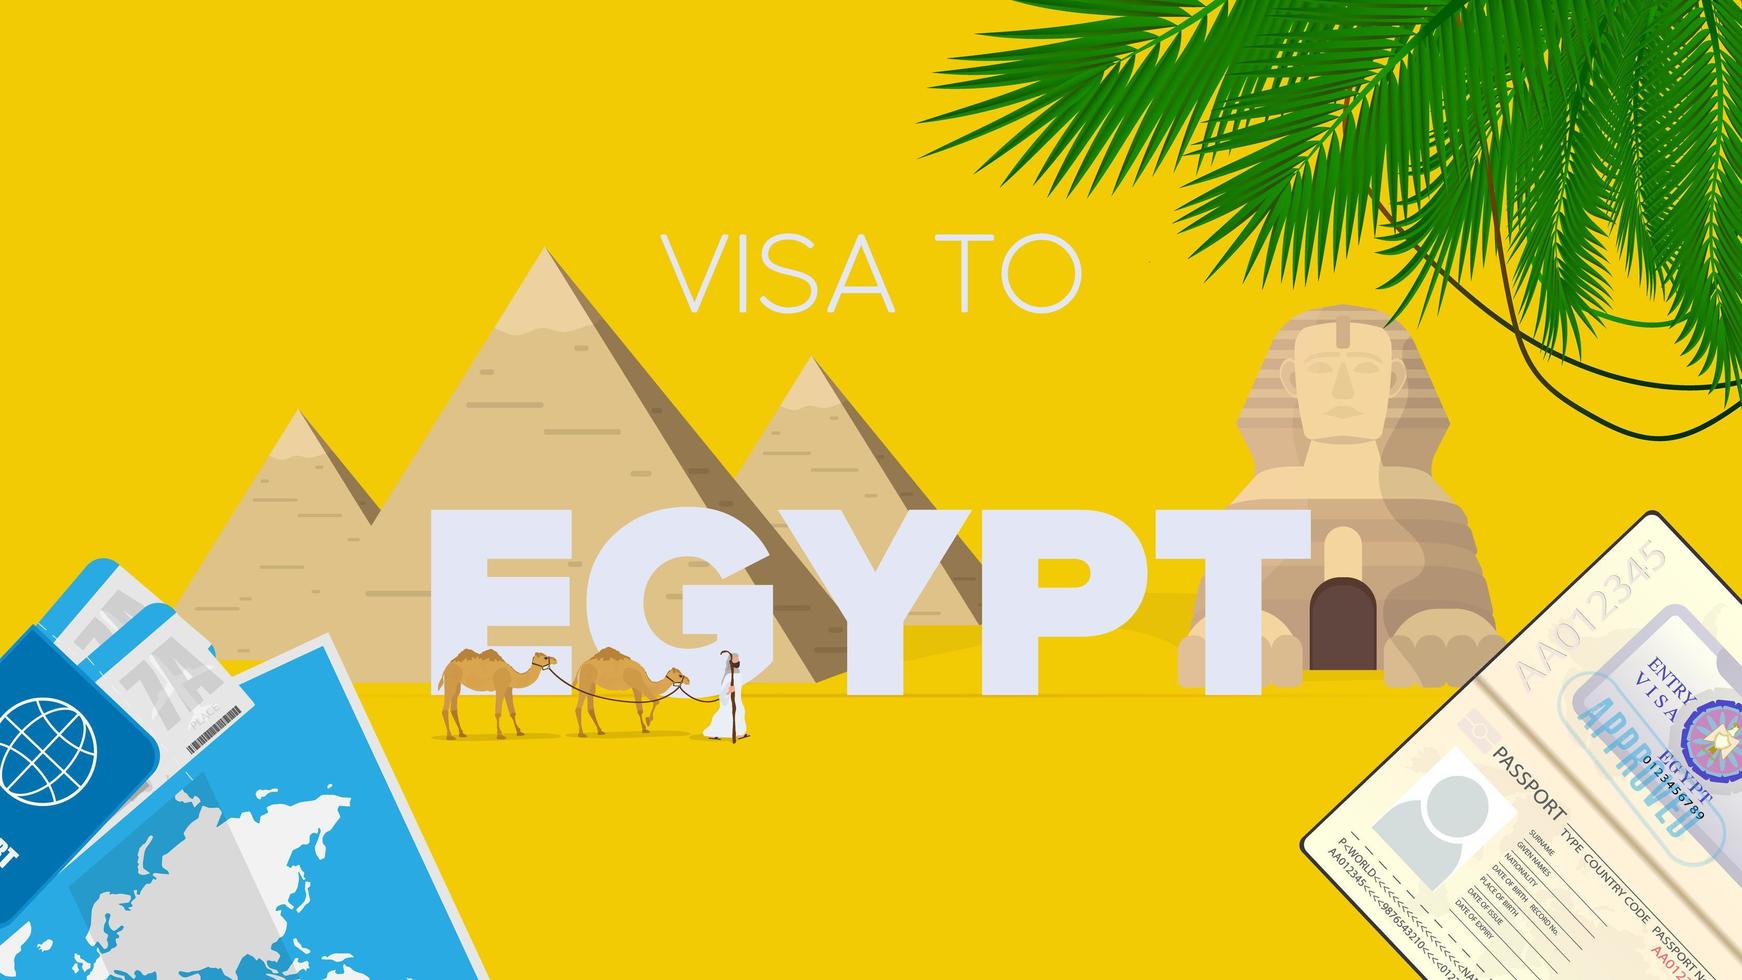 Egypt visa yellow banner. Passport, airline tickets, world map, Egypt visa, camel caravan, Egyptian pyramids and sphinx. Vector poster.